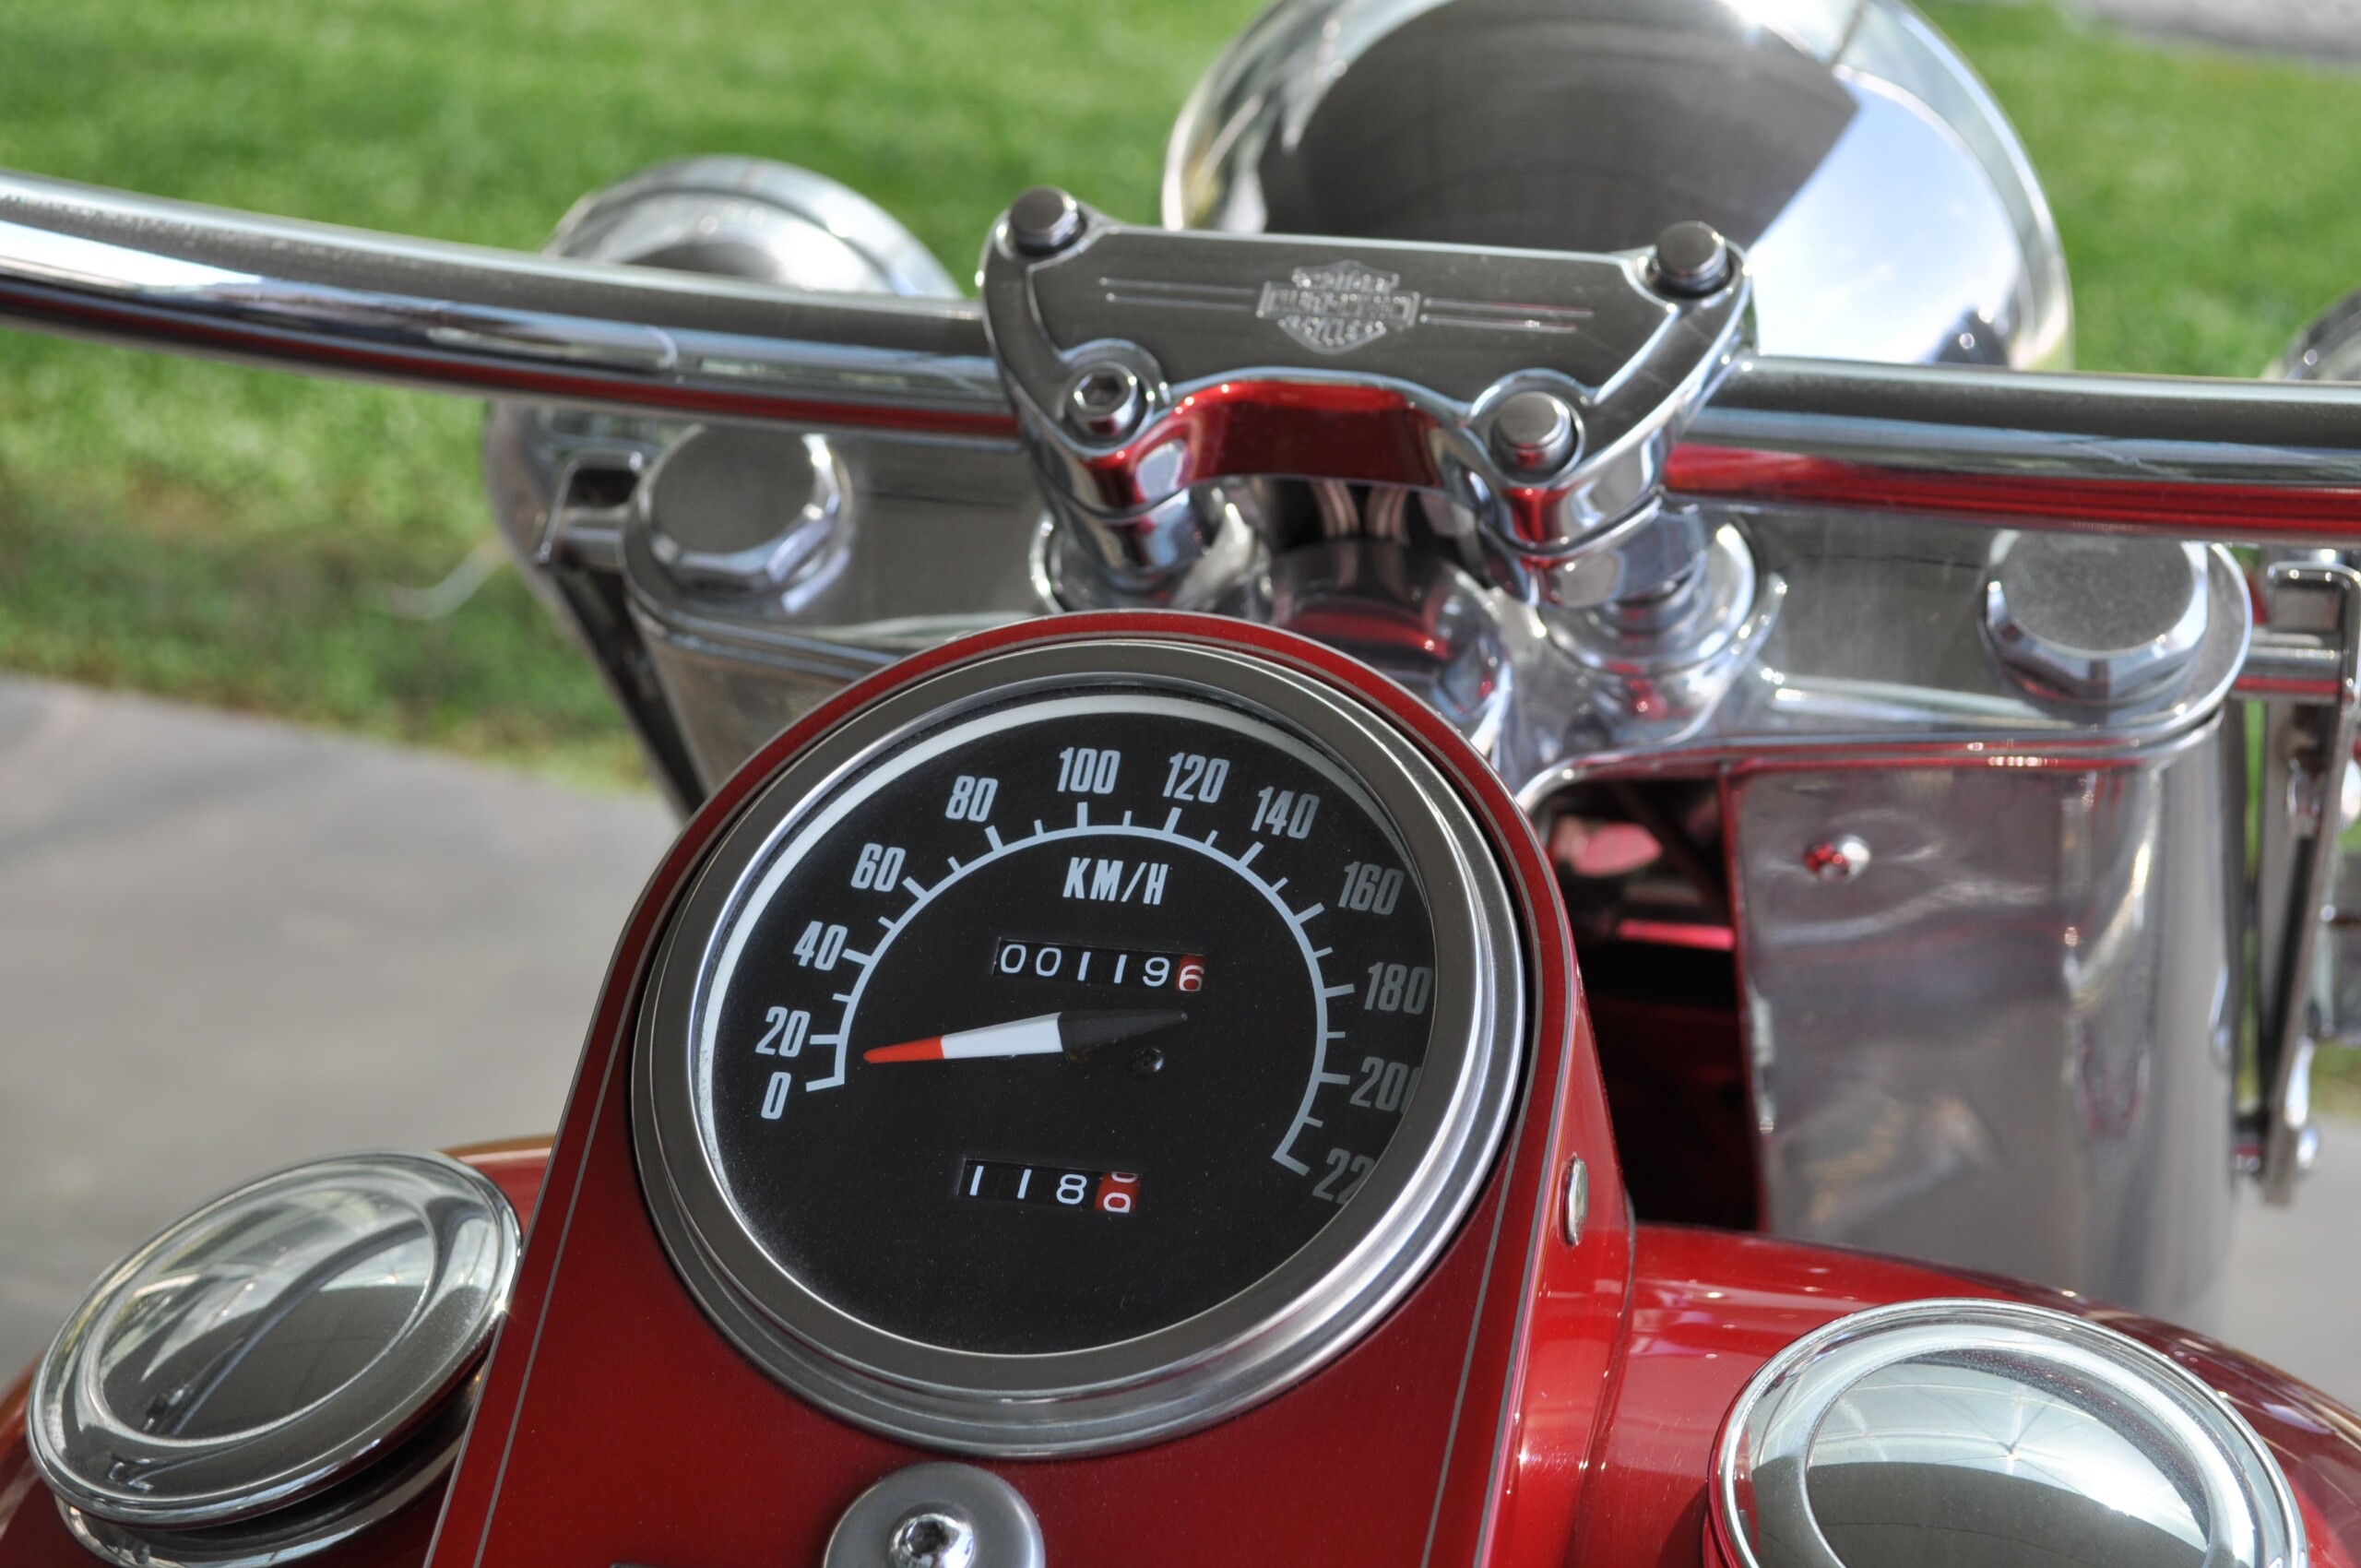 Il Museo Nicolis a Motor Bike Expo con la suadente Harley-Davidson FLSTC Heritage Softail Classic “H-Paradise”